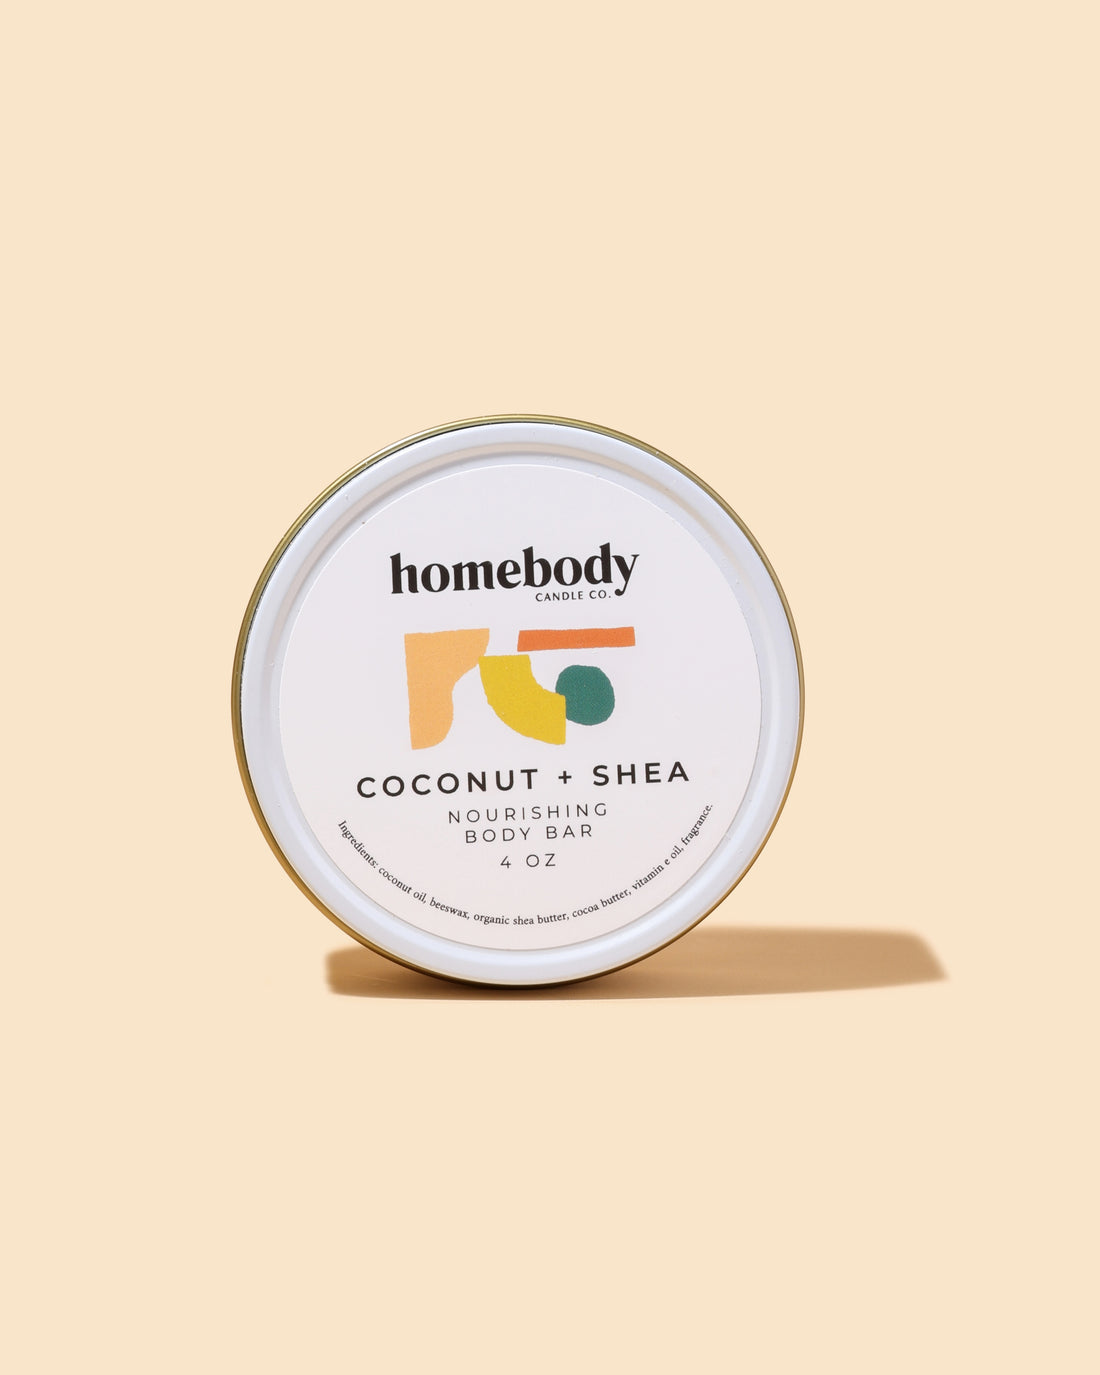 Coconut + Shea body bar Homebody Candle Co